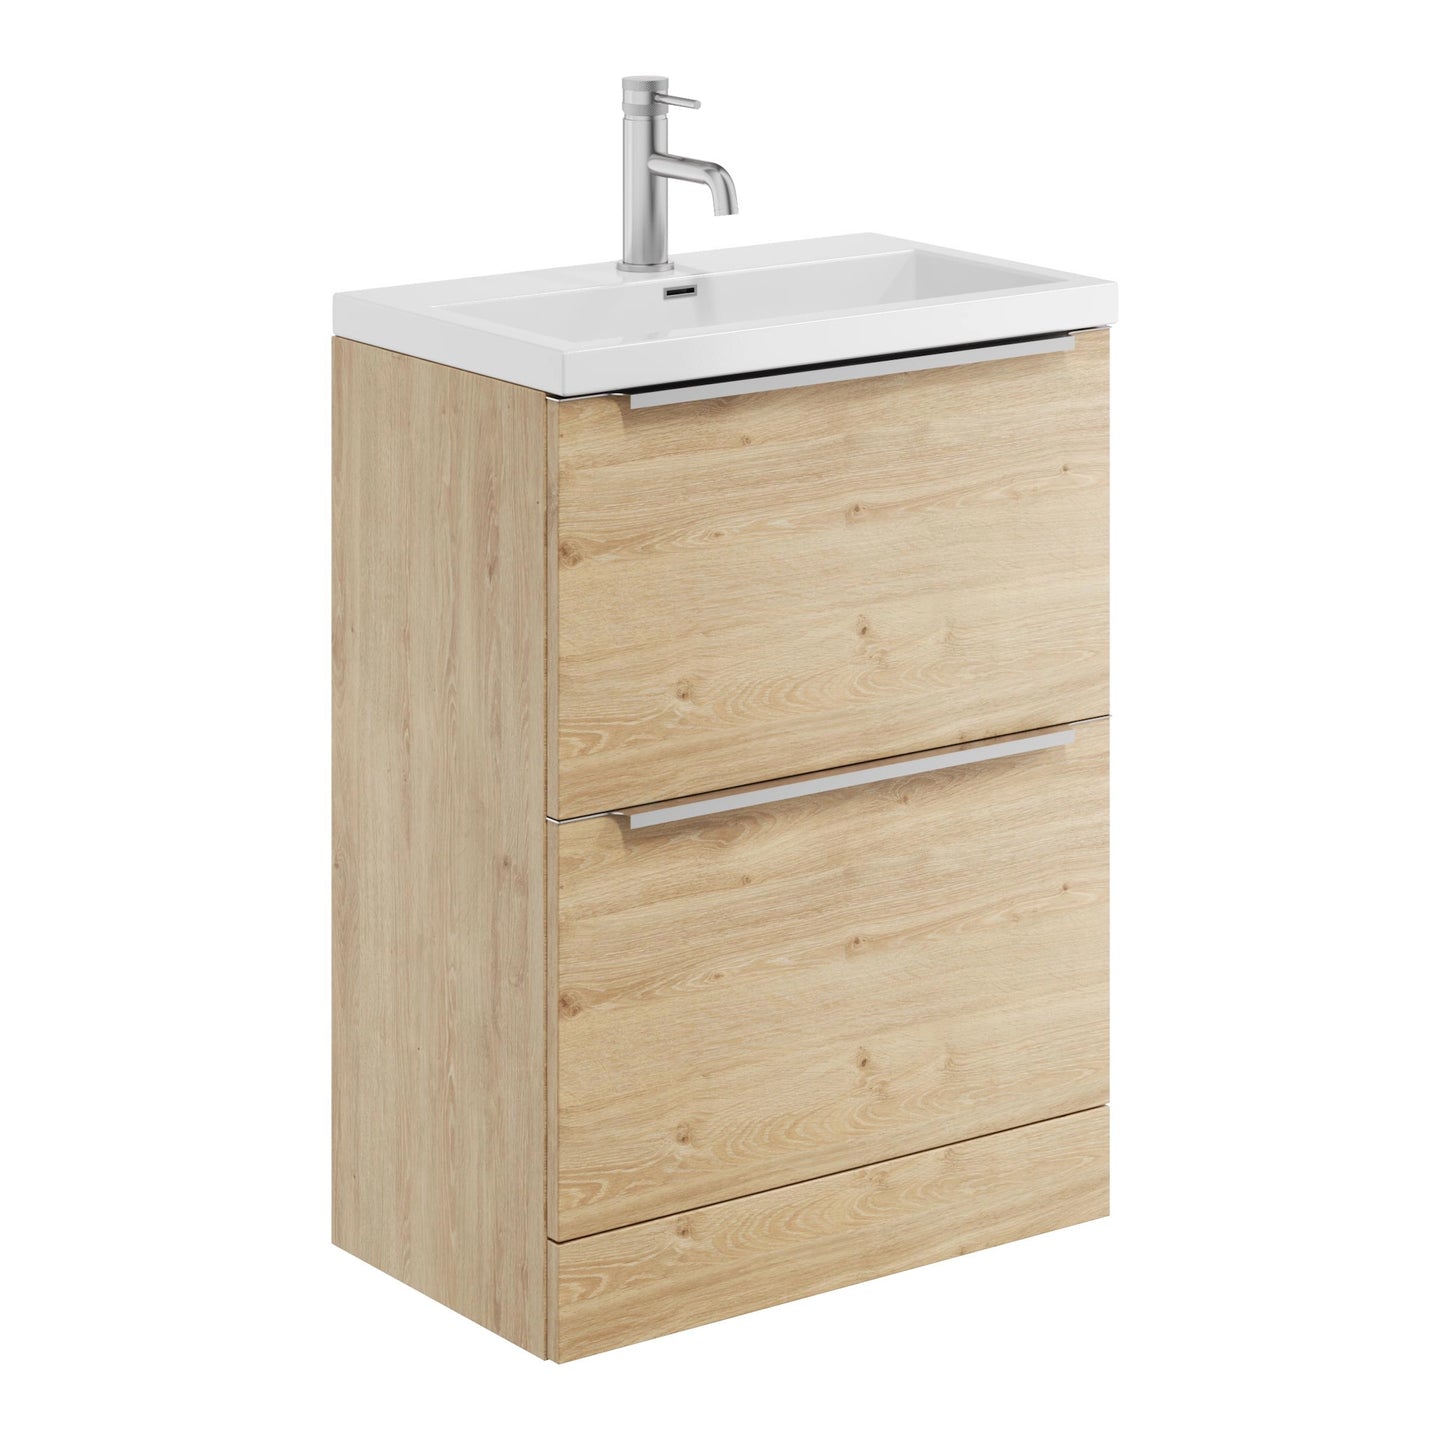 Muro Plus Floor Standing Basin Sink Vanity Unit